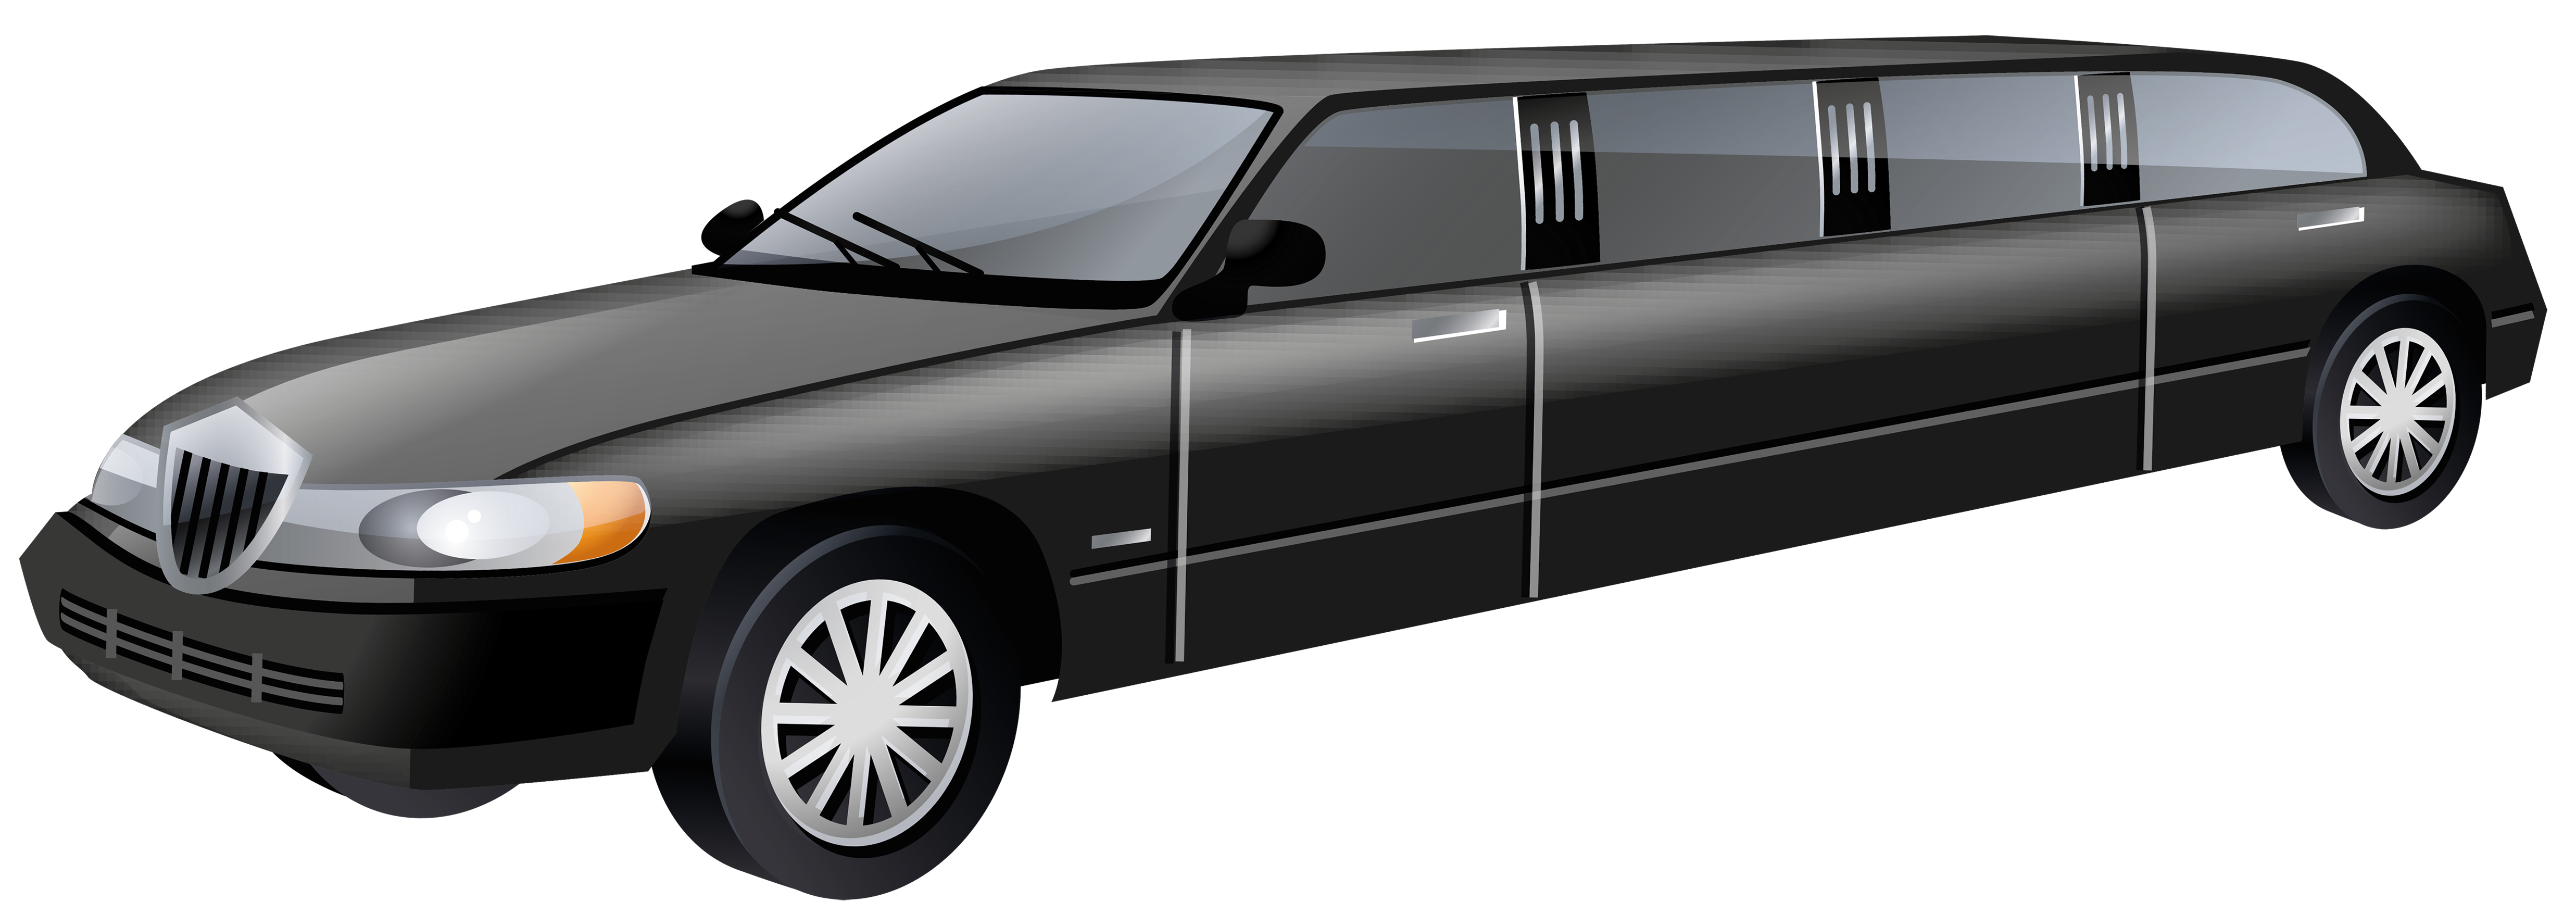 free download clipart limousine